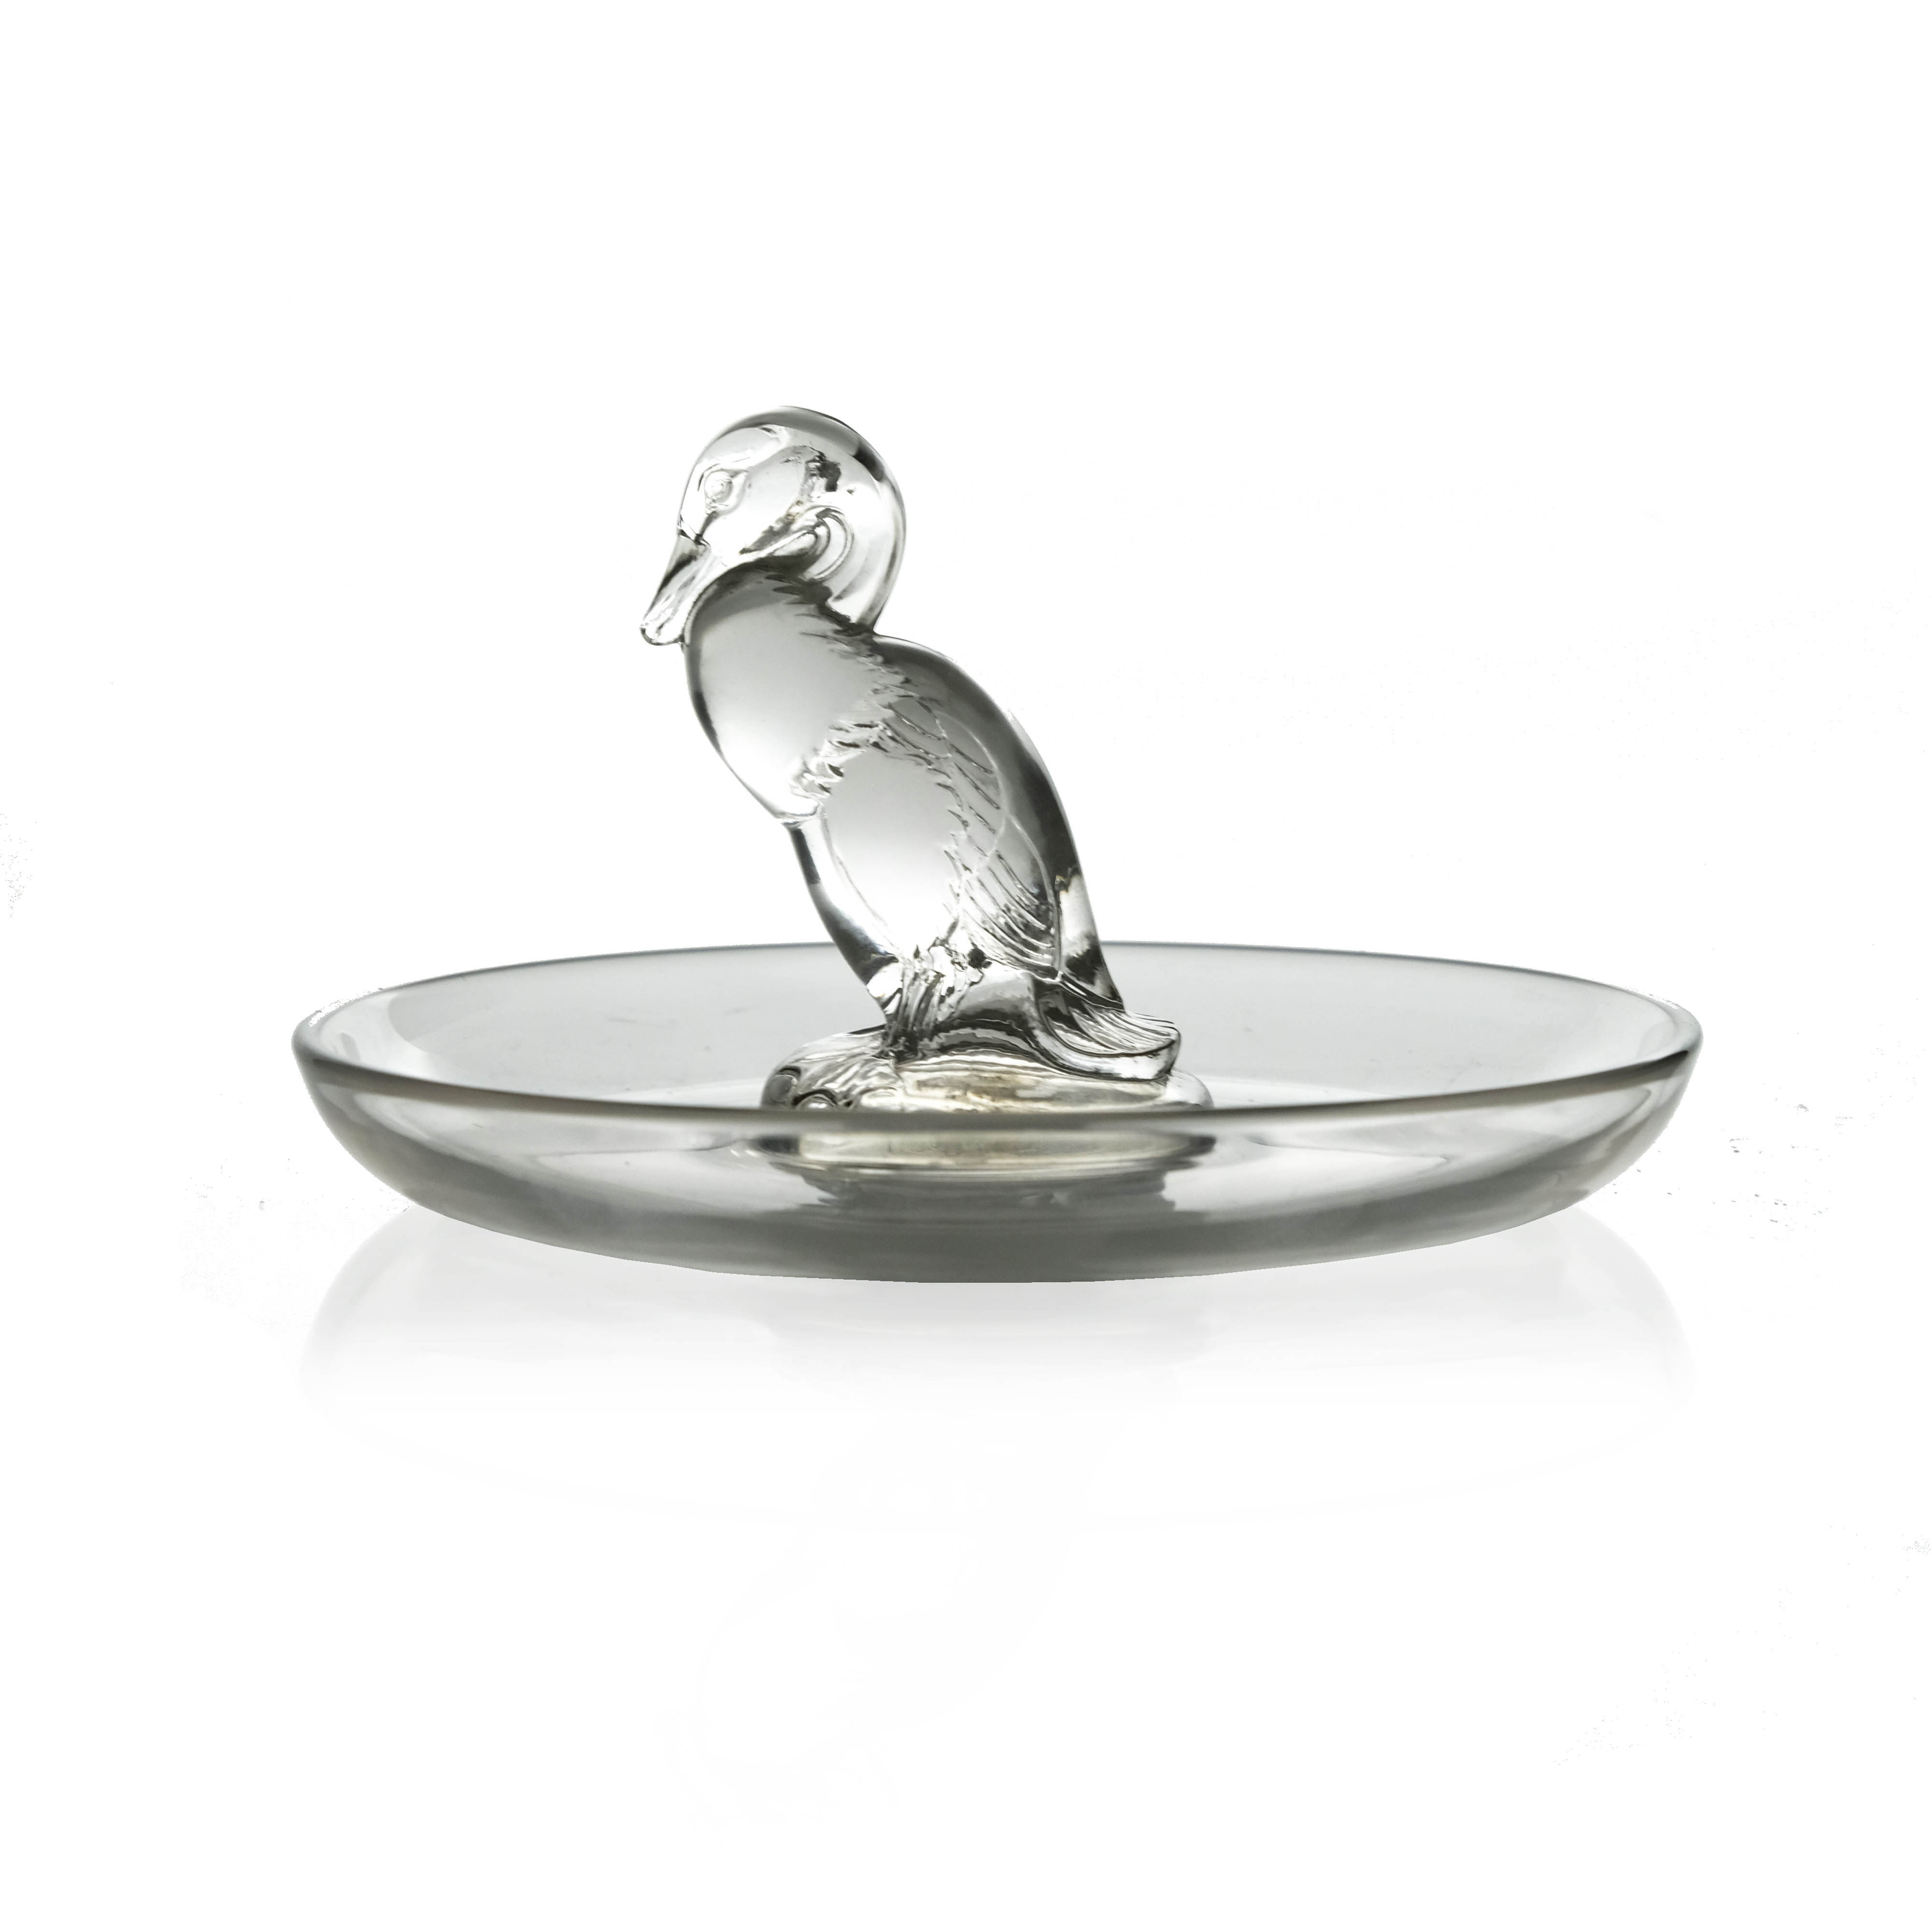 Rene Lalique, a Canard glass ashtray or pin dish